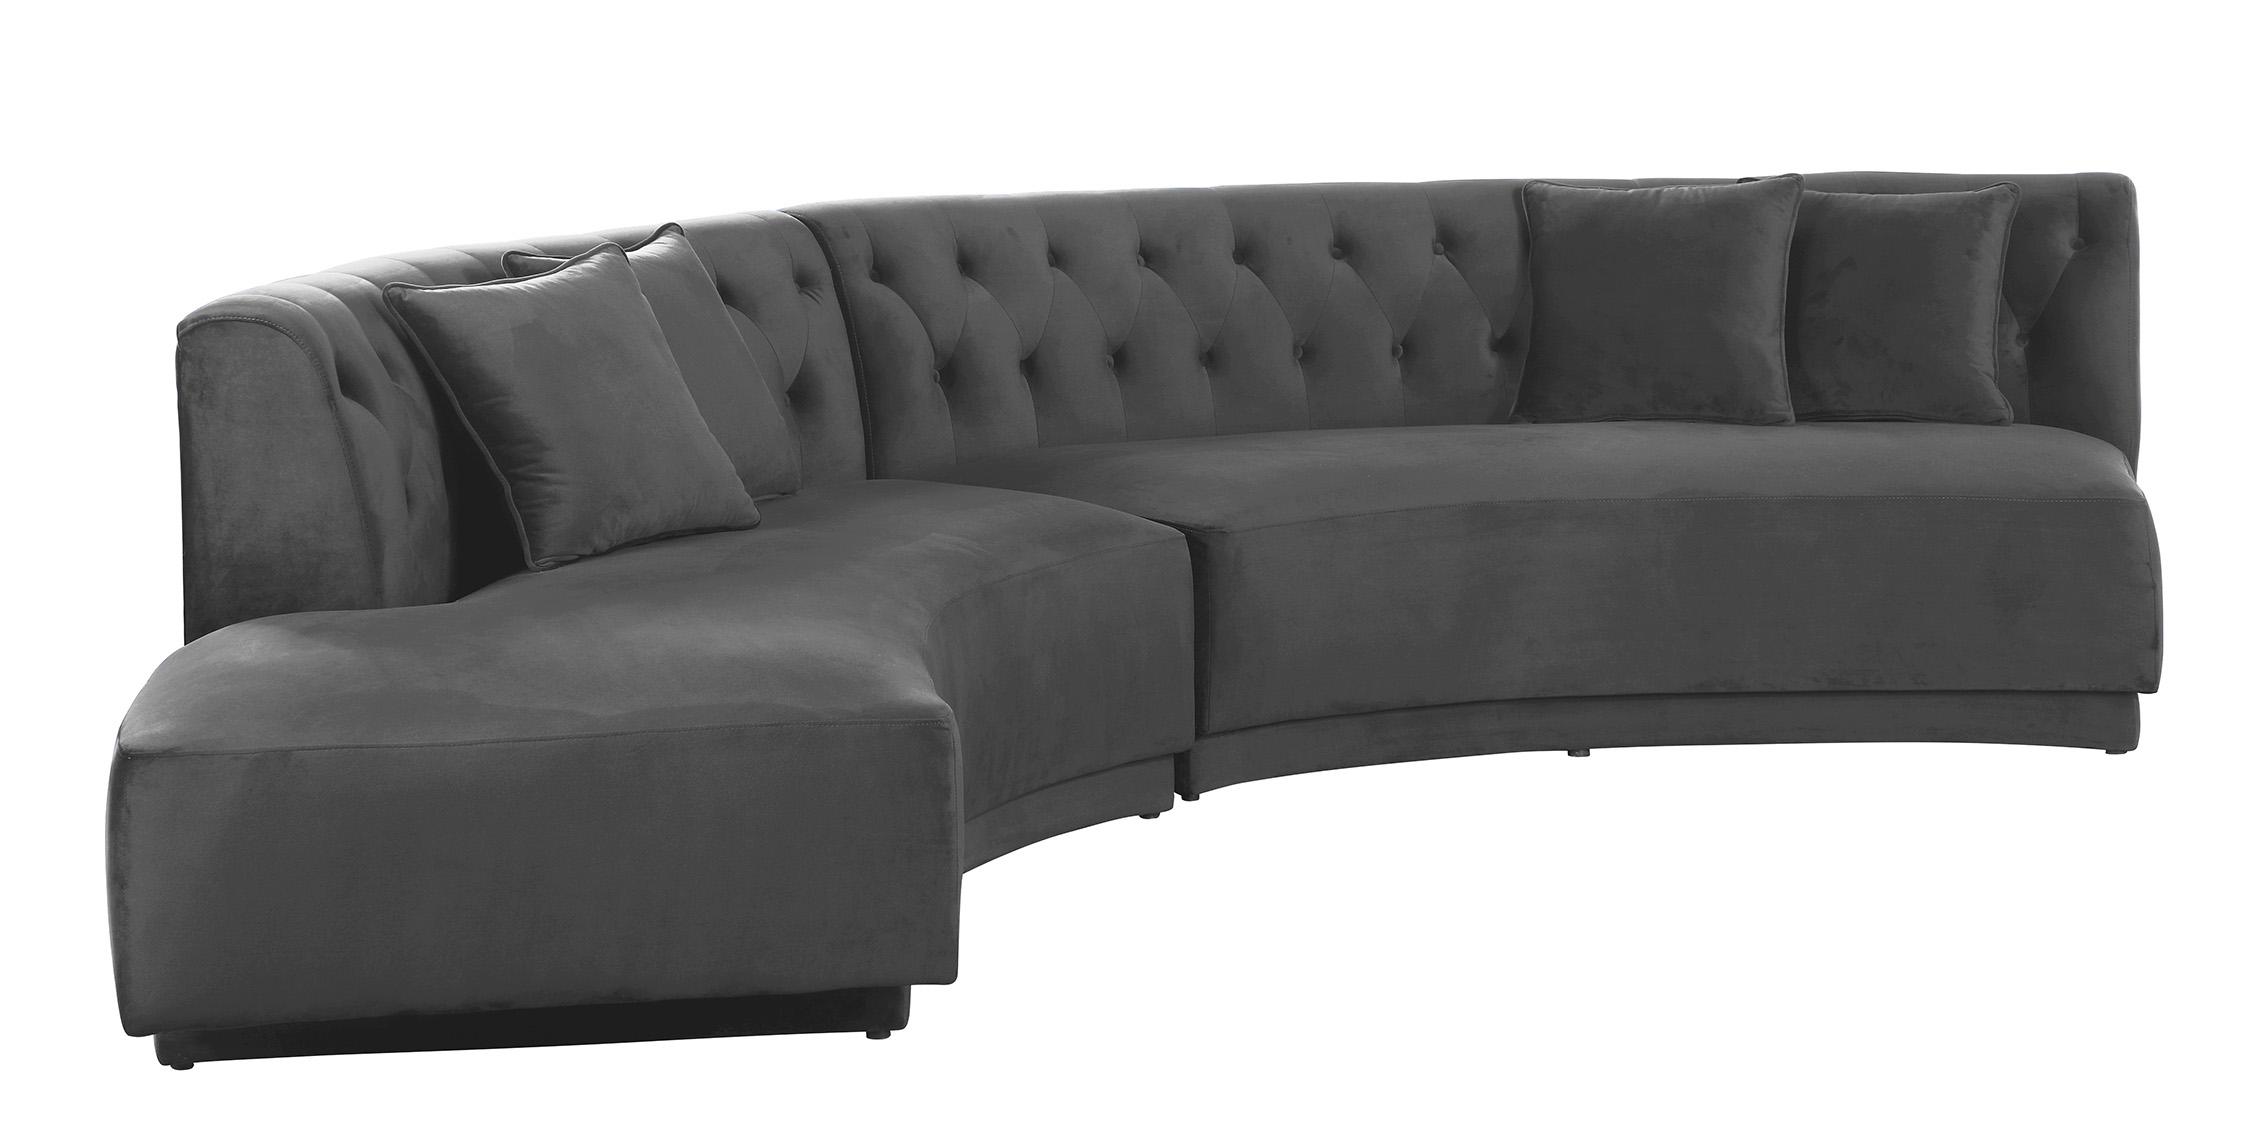 Contemporary, Modern Sectional Sofa KENZI 641Grey 641Grey-Sectional in Gray Velvet